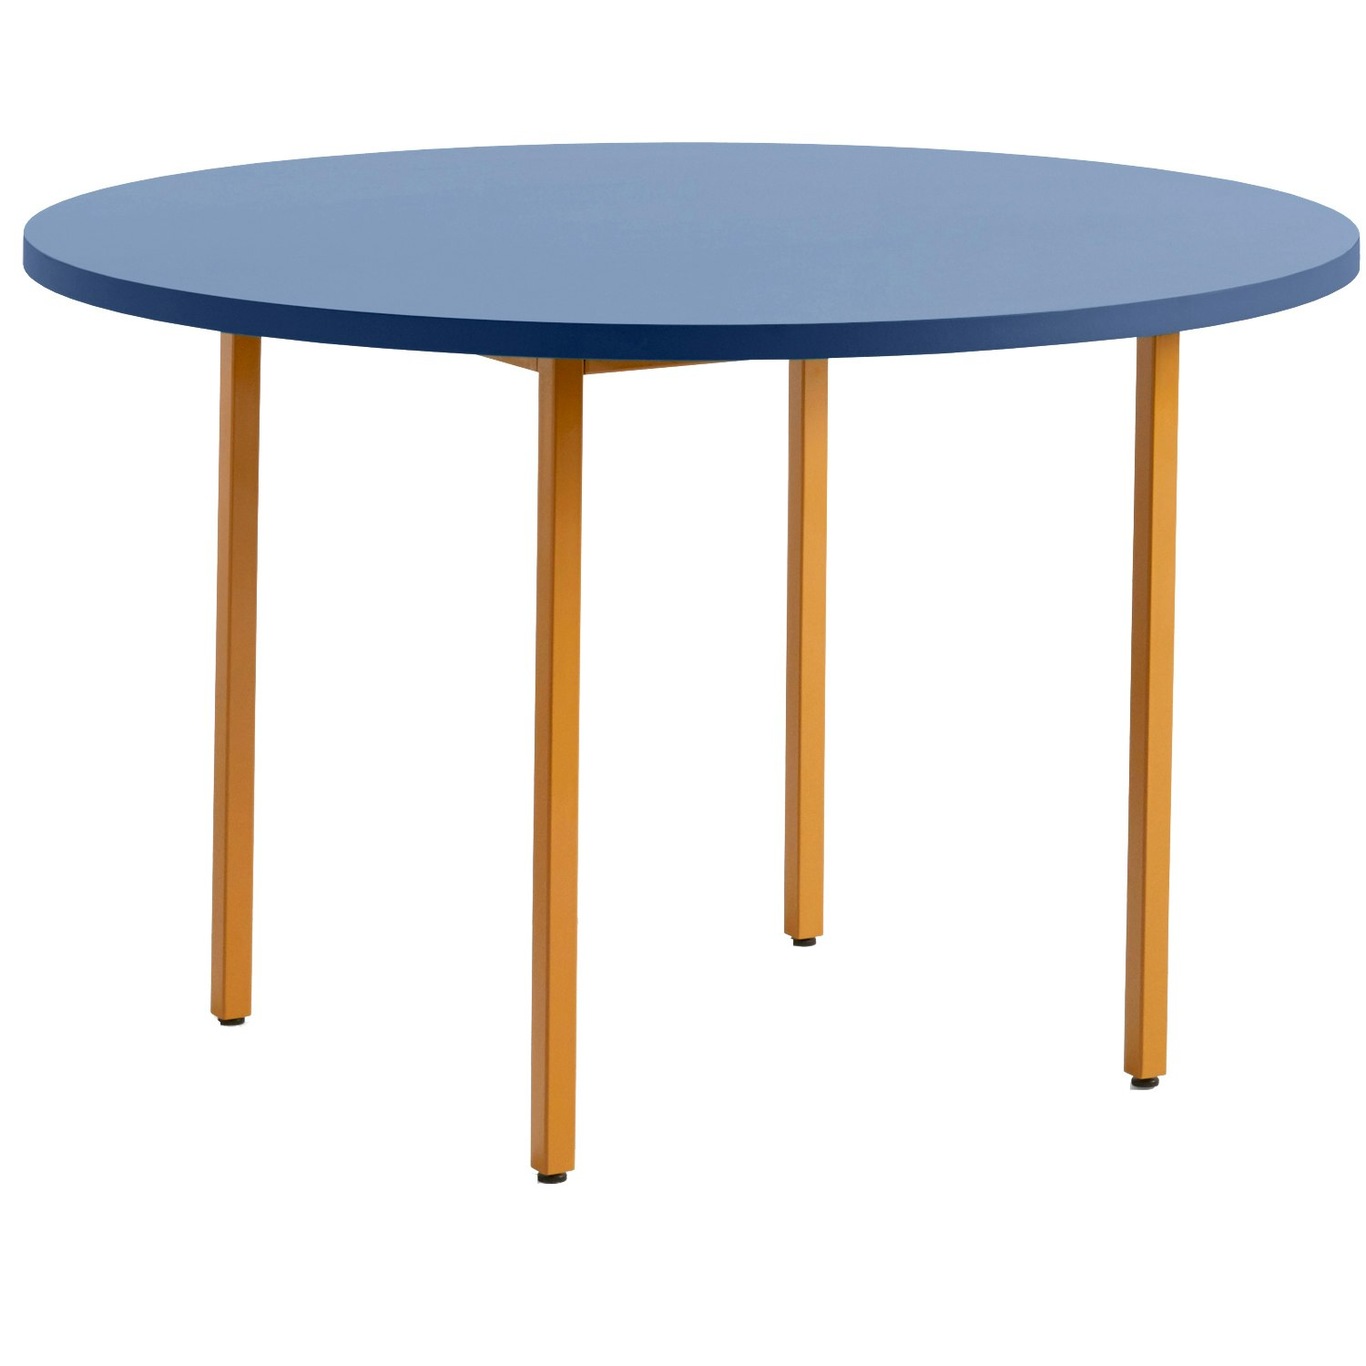 Two-Colour Tisch Ø120cm, Ocker / Blau